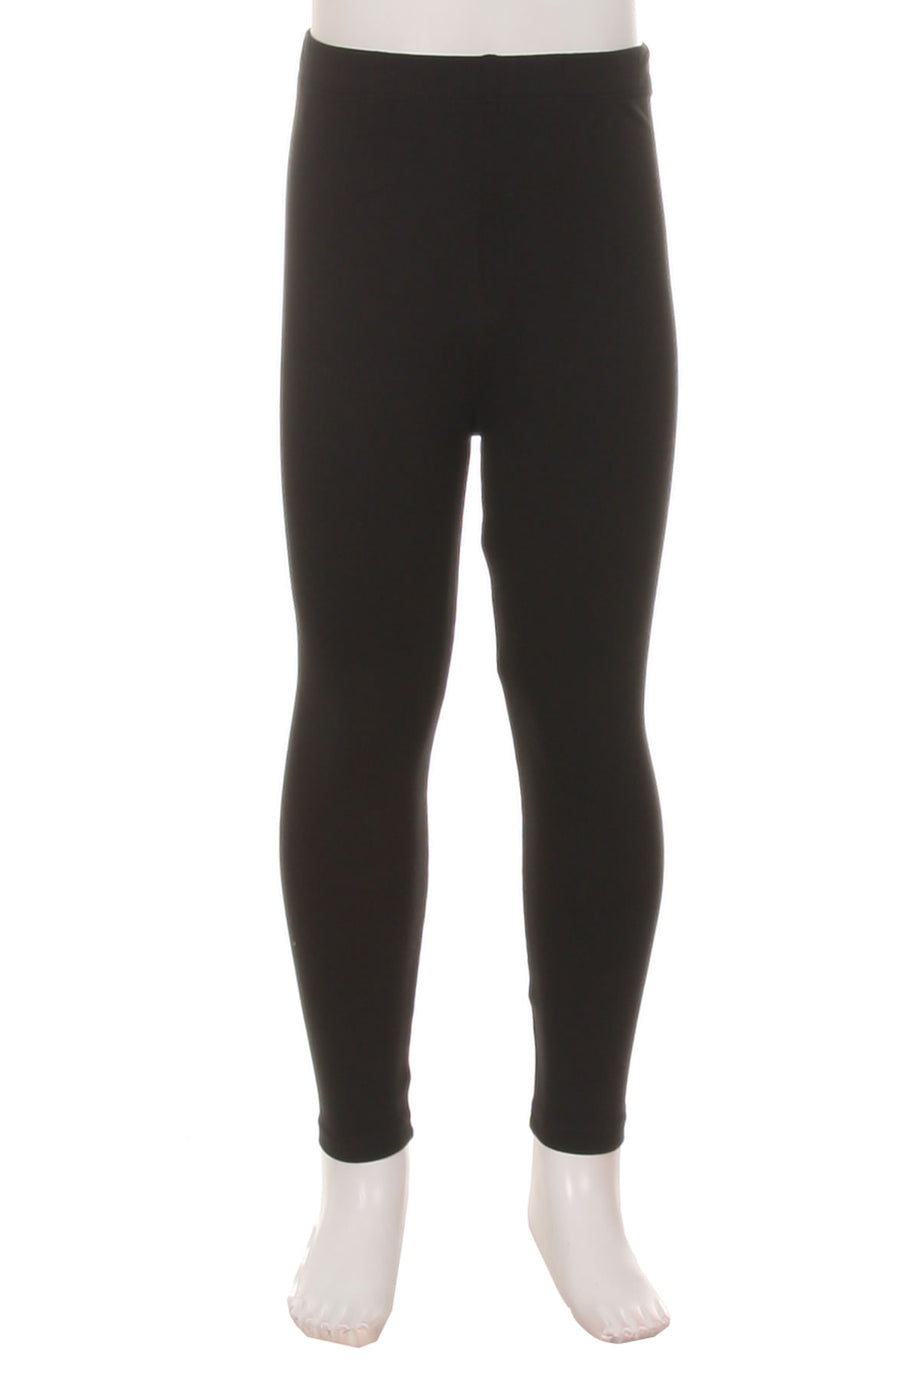 Colorfulkoala camo leggings Black Size XS - $12 (64% Off Retail